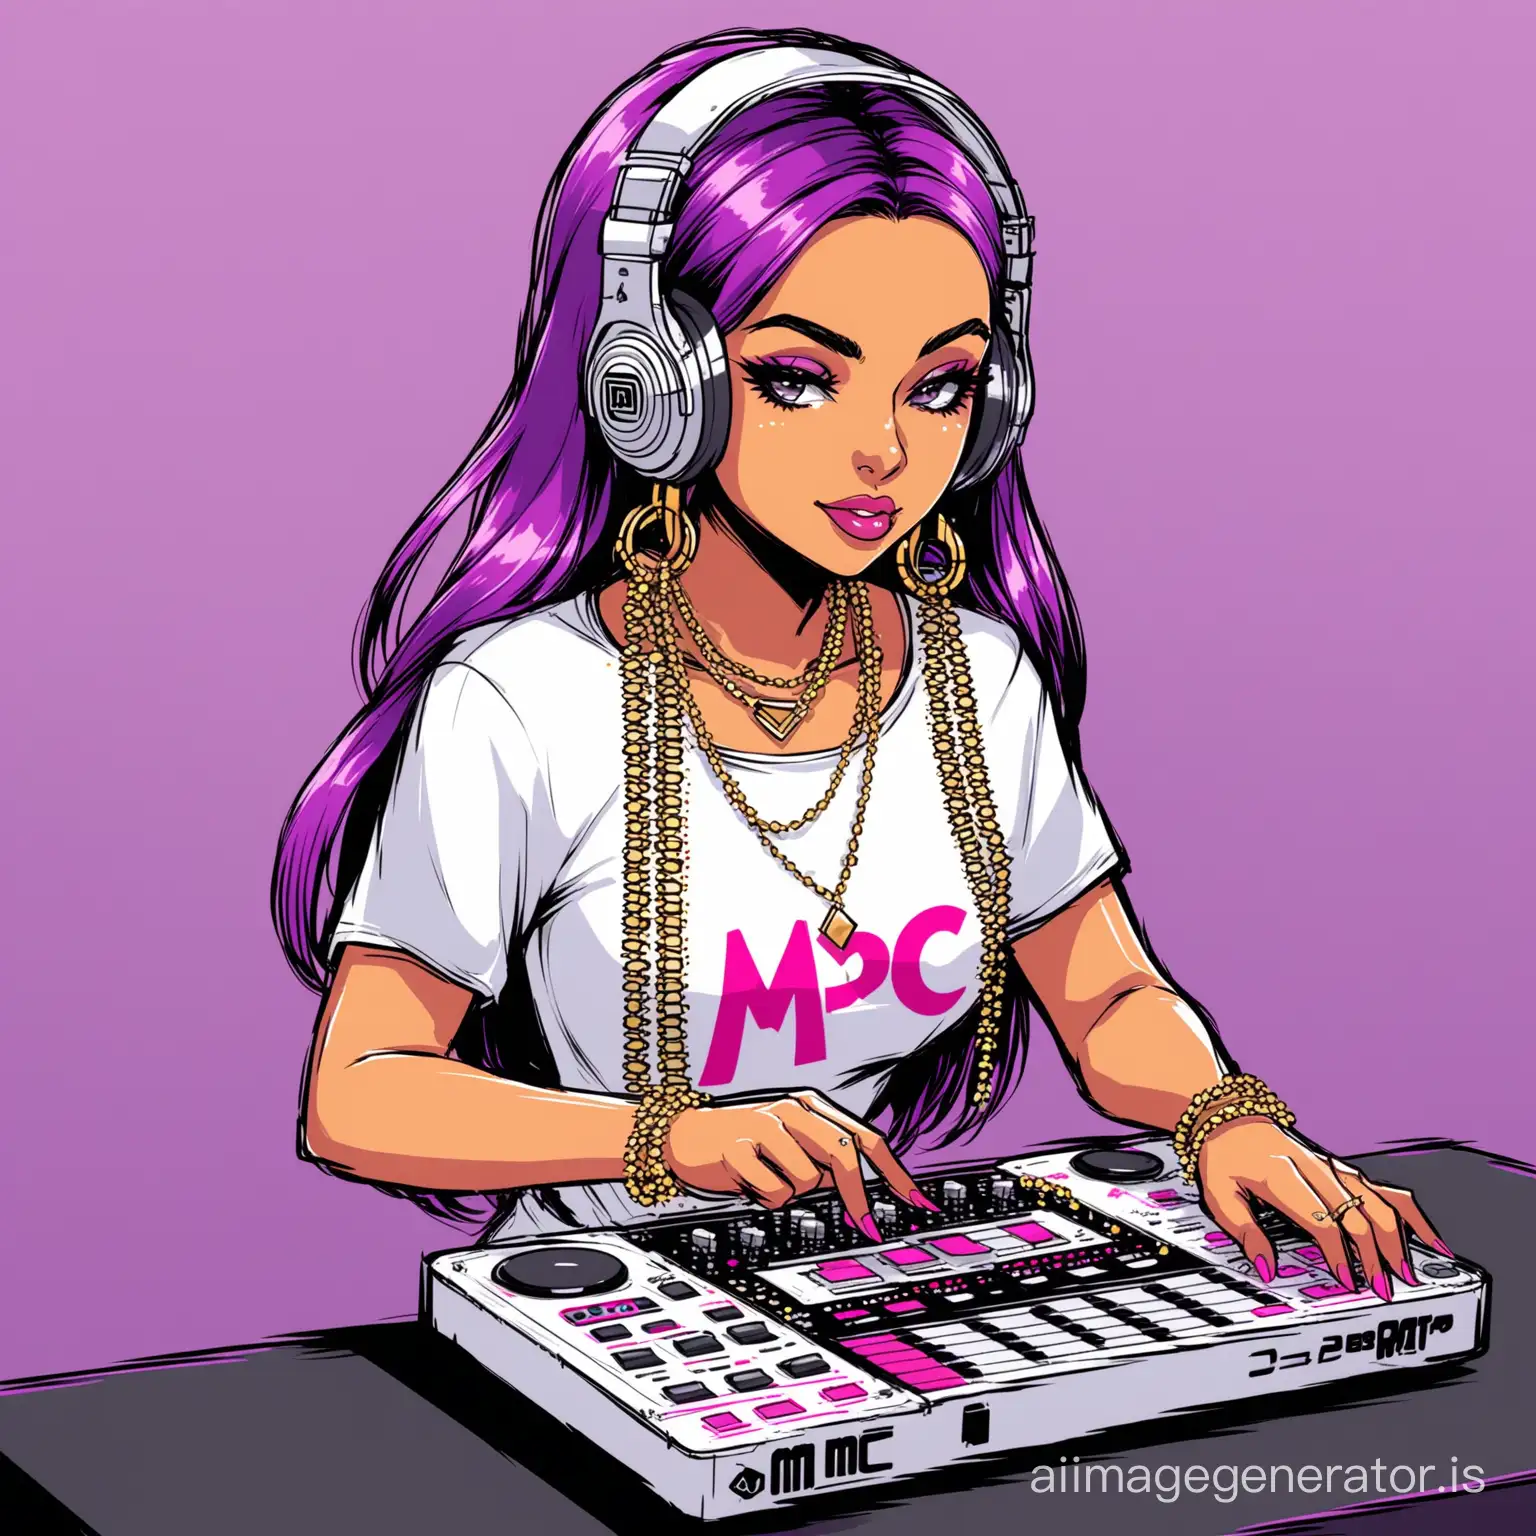 Cartoon-Woman-Creating-Music-on-MPC-Beat-Machine-with-Diamond-Chain-Accessory